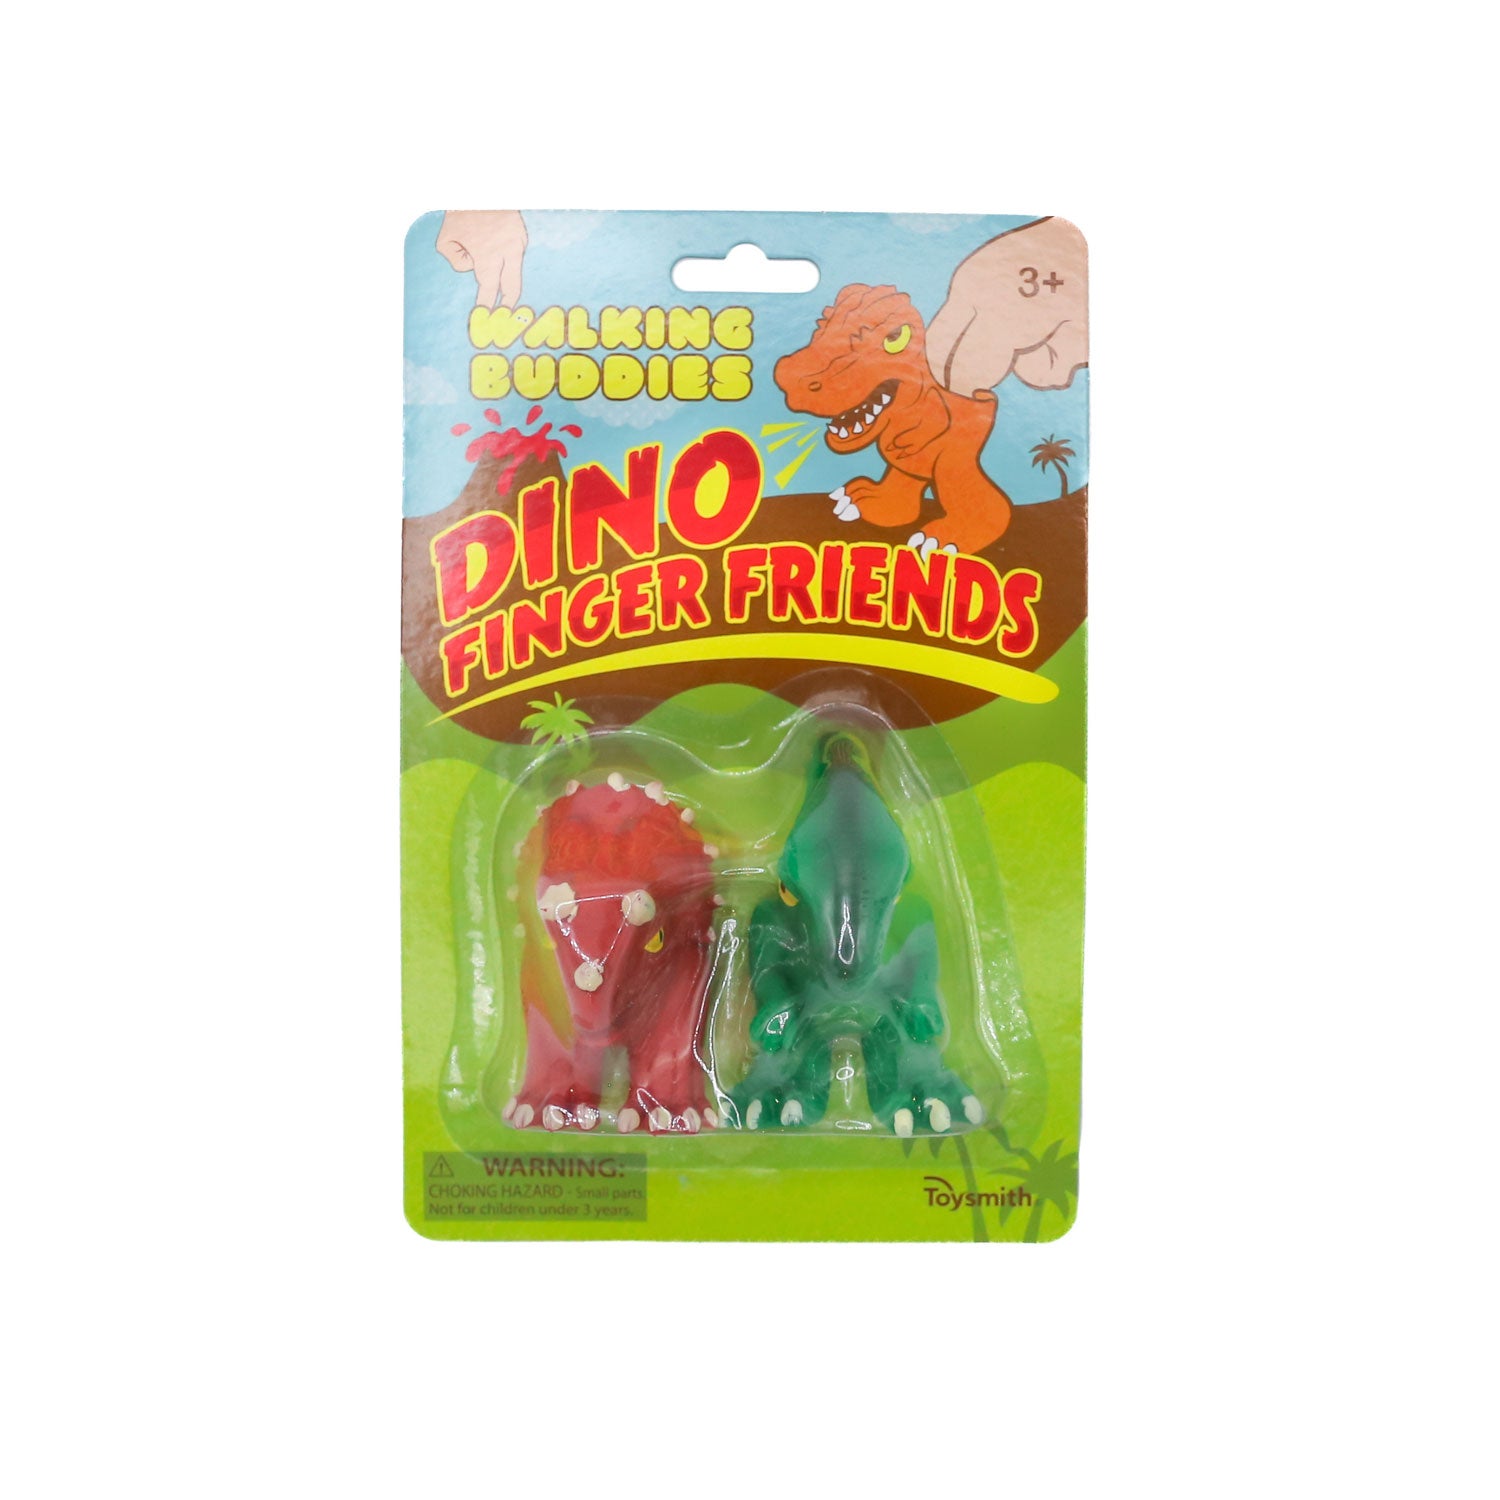 Toysmith Walking Buddies - Dino Finger Friends Puppets